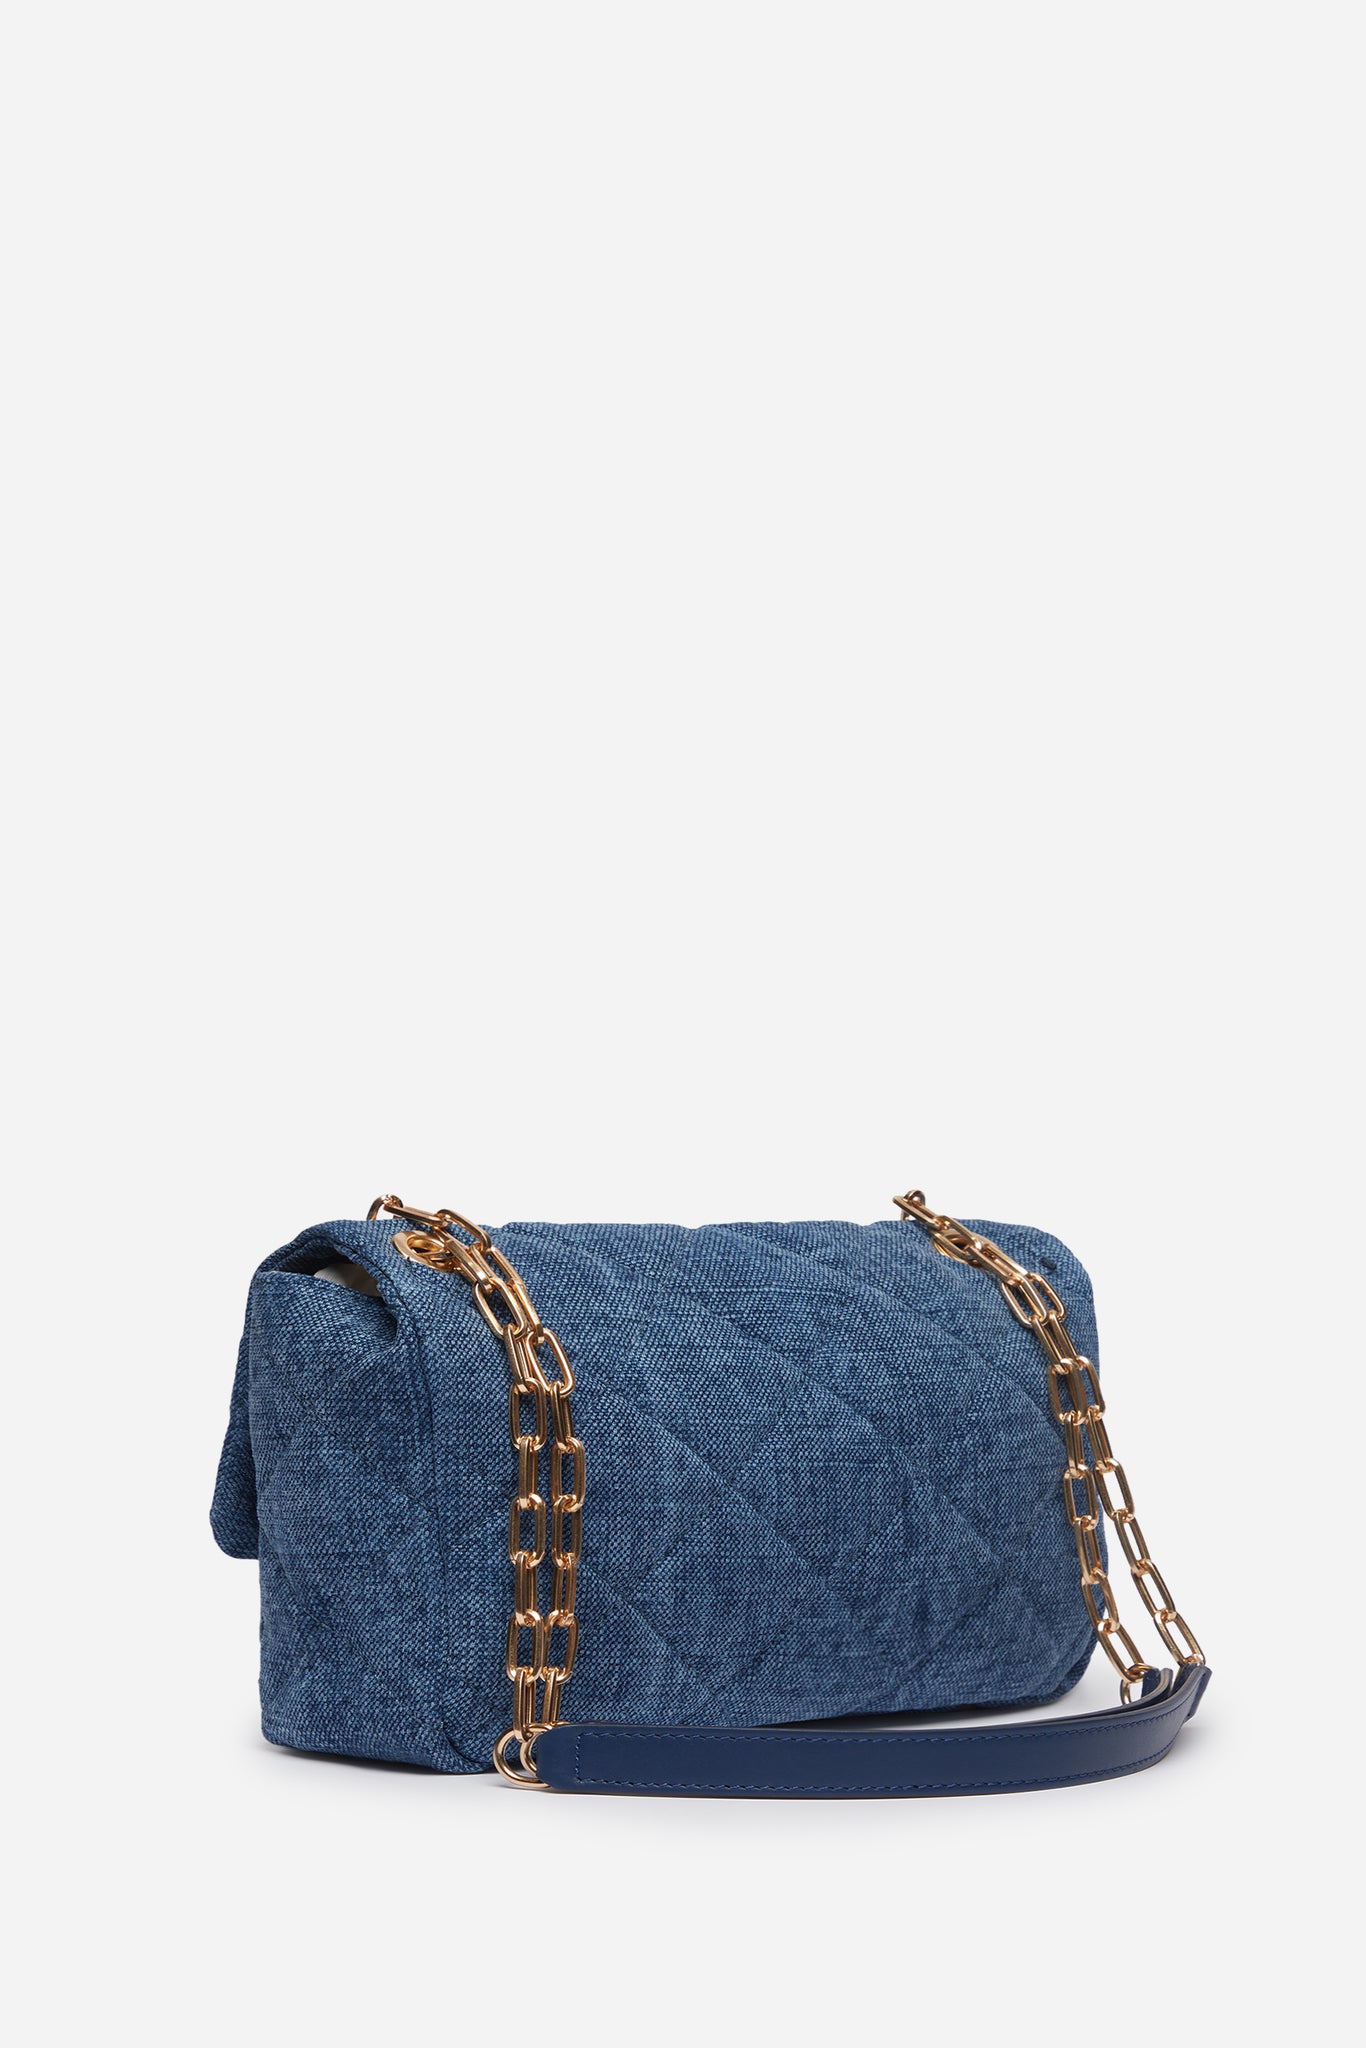 Linen Moon handbag, indigo